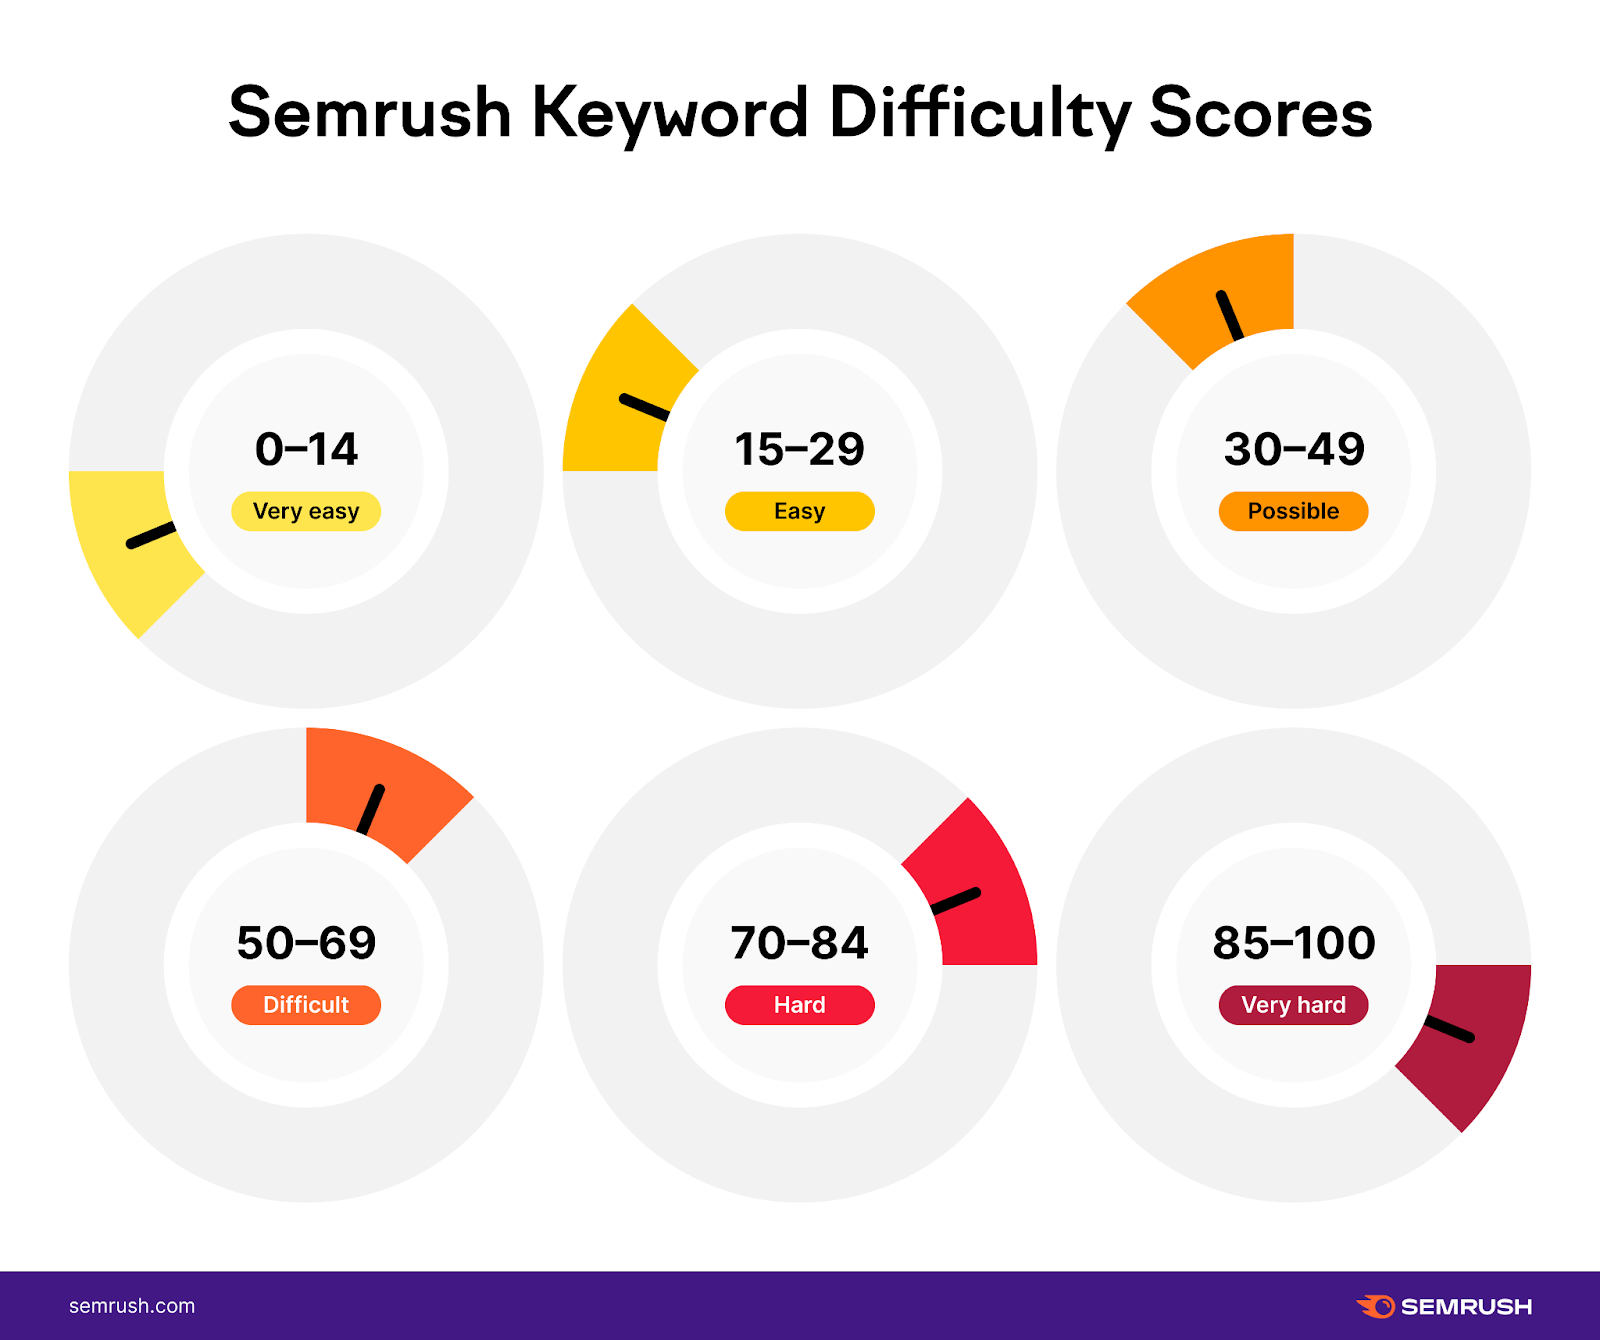 "Semrush Keyword Difficulty Scores"